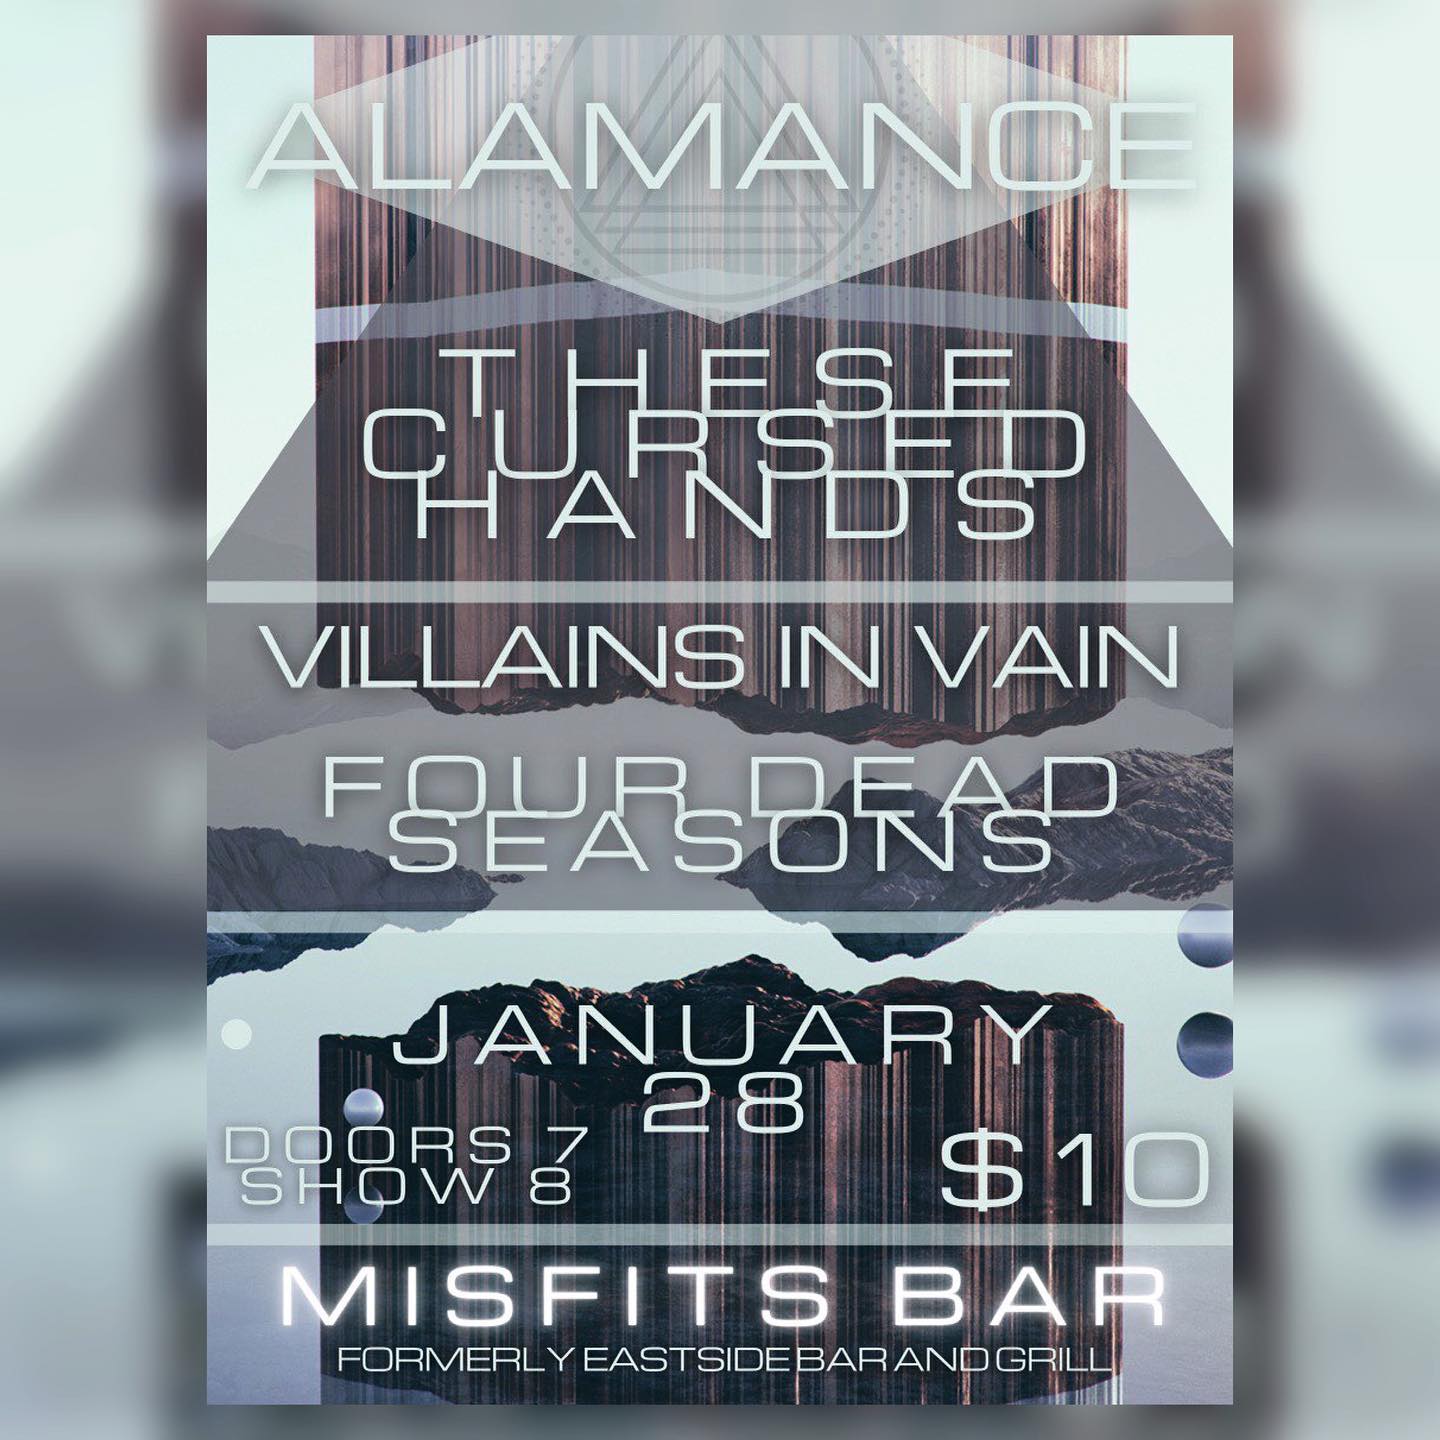 Alamance, These Cursed Hands, Villains In Vain, Four Dead Seasons